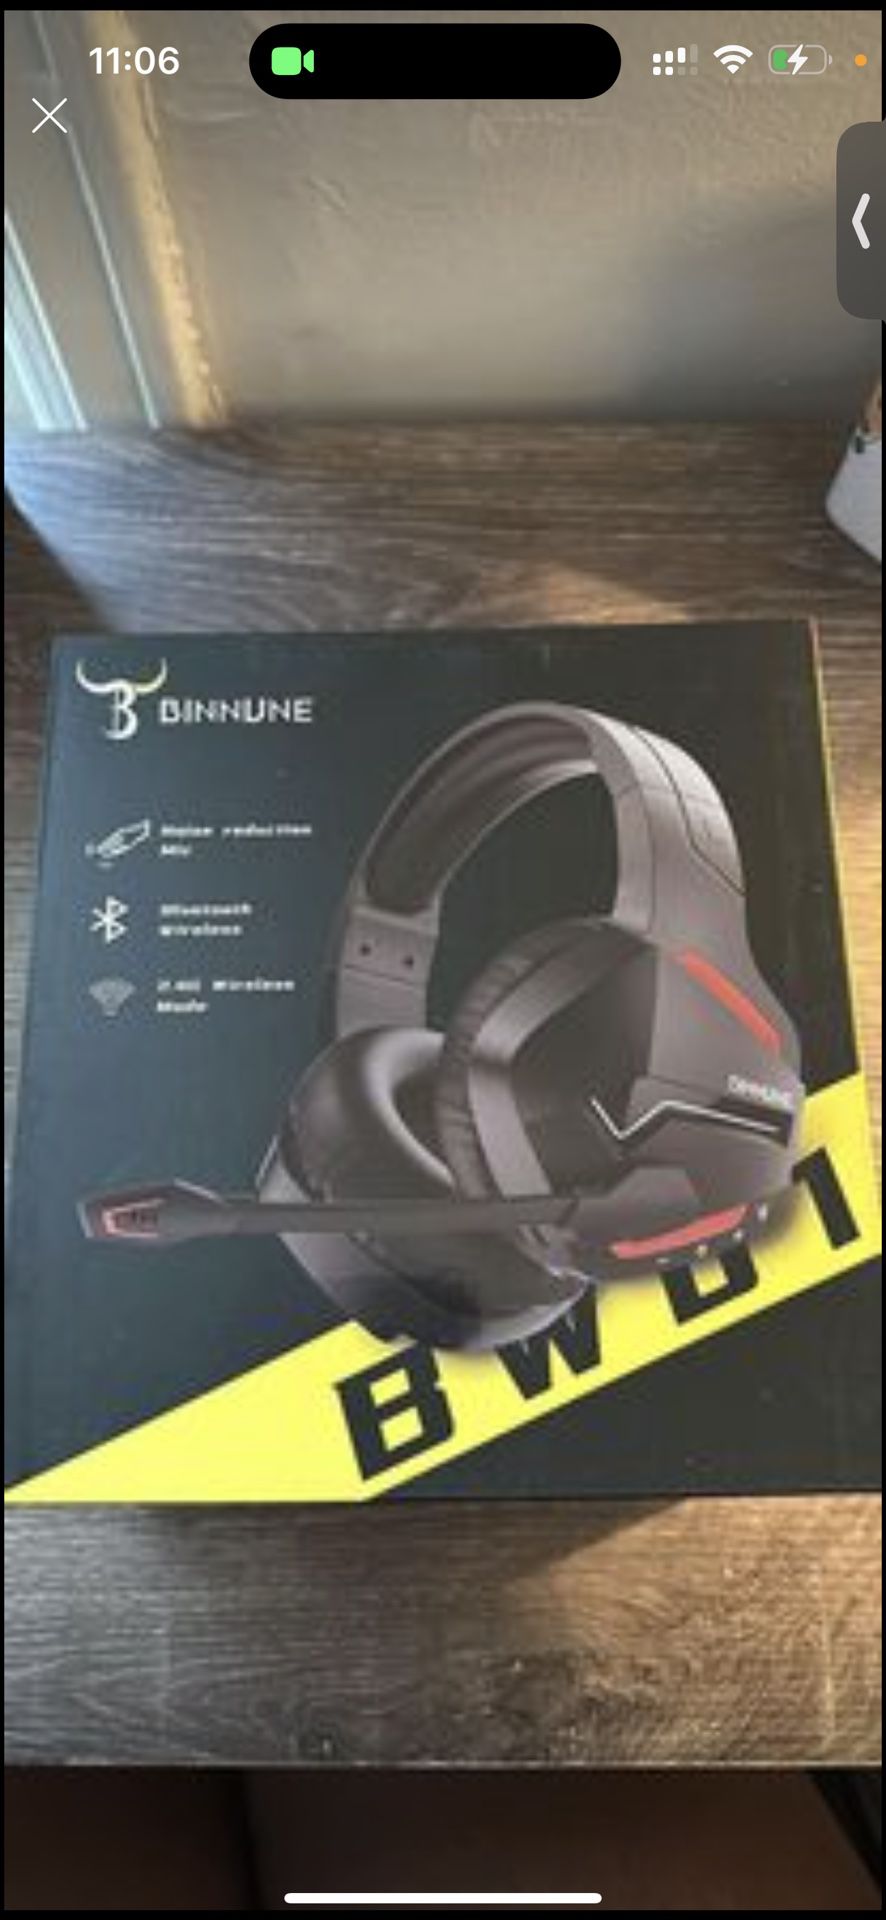 BINNUNE Wireless Gaming Headset